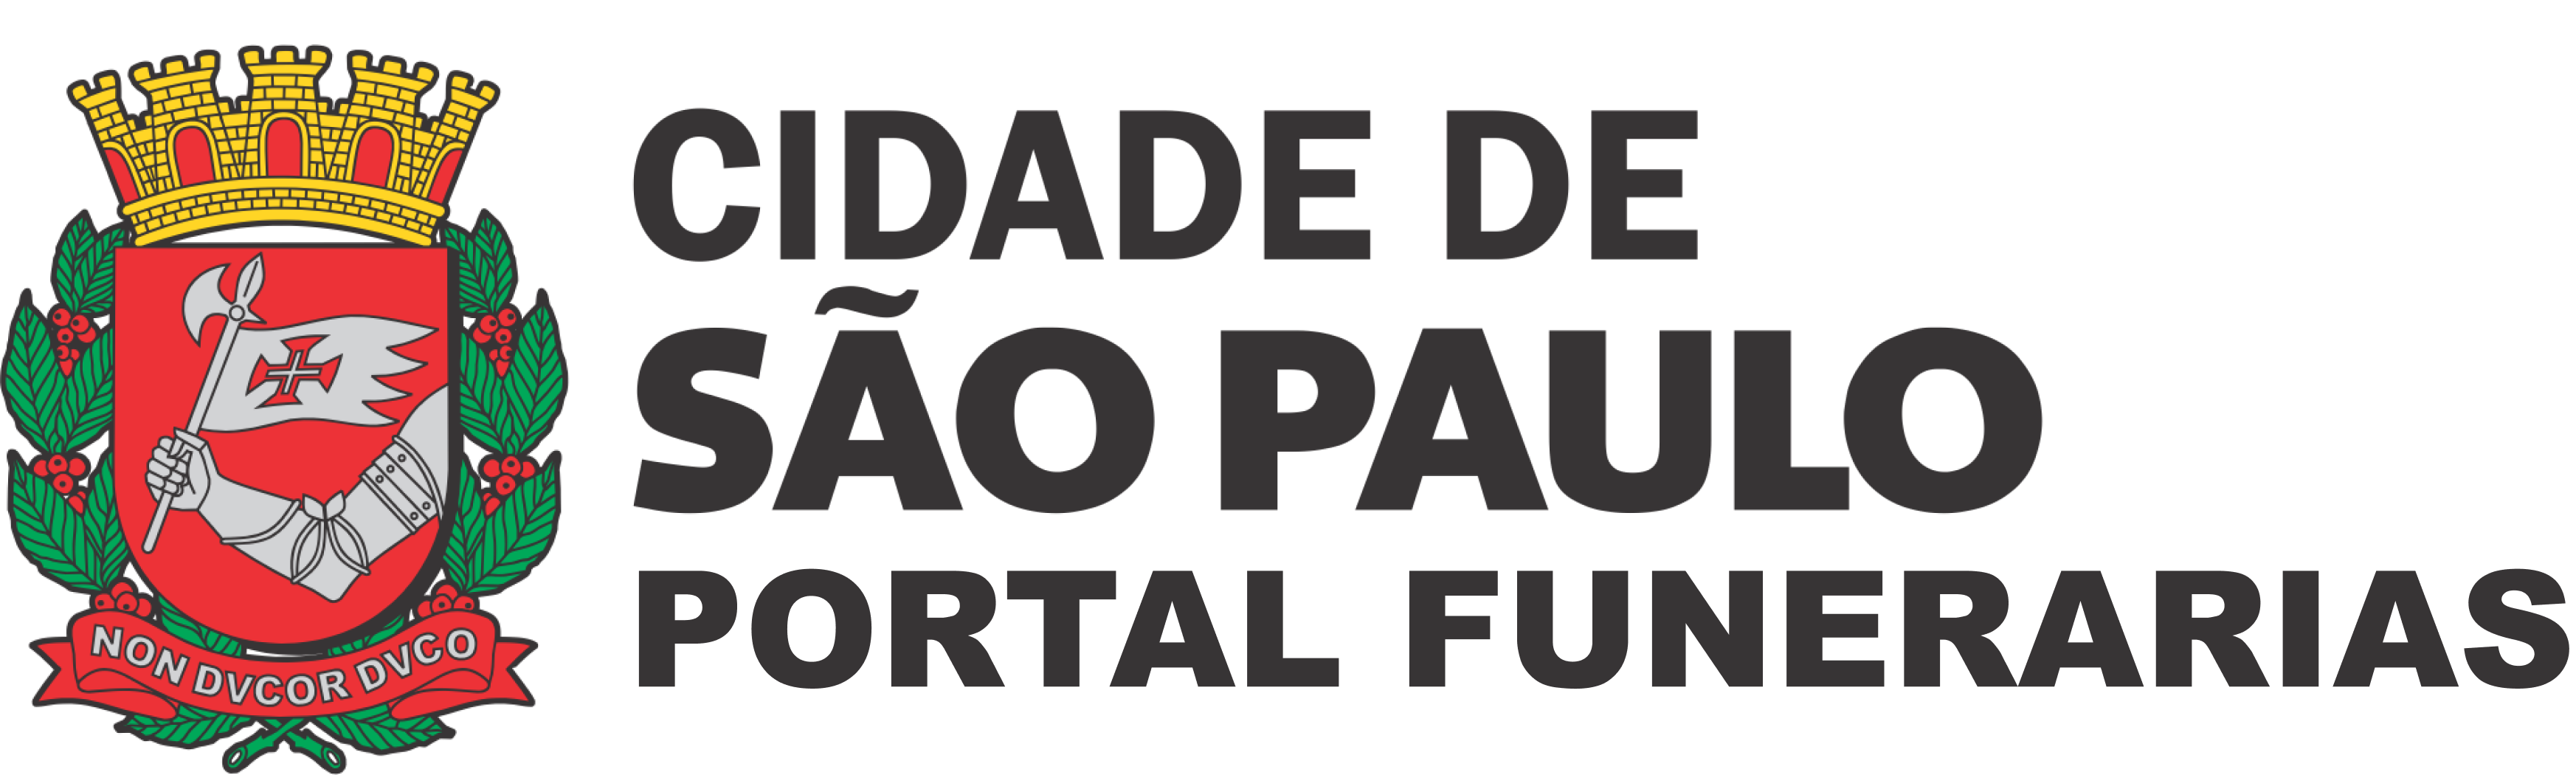 Portal Funerarias